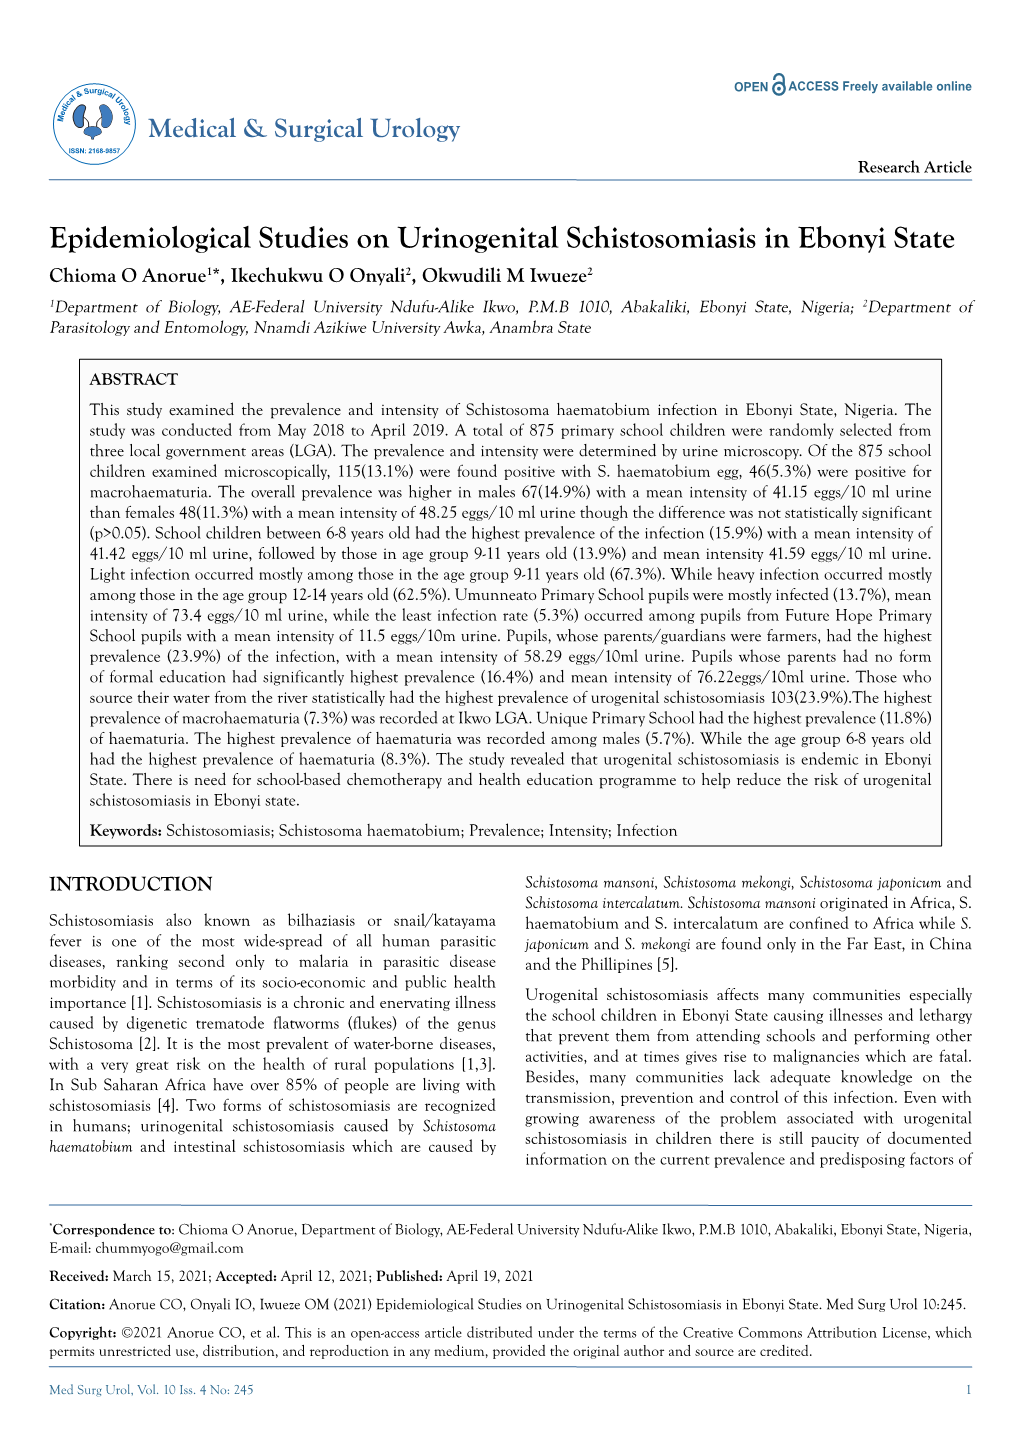 Epidemiological Studies on Urinogenital Schistosomiasis In